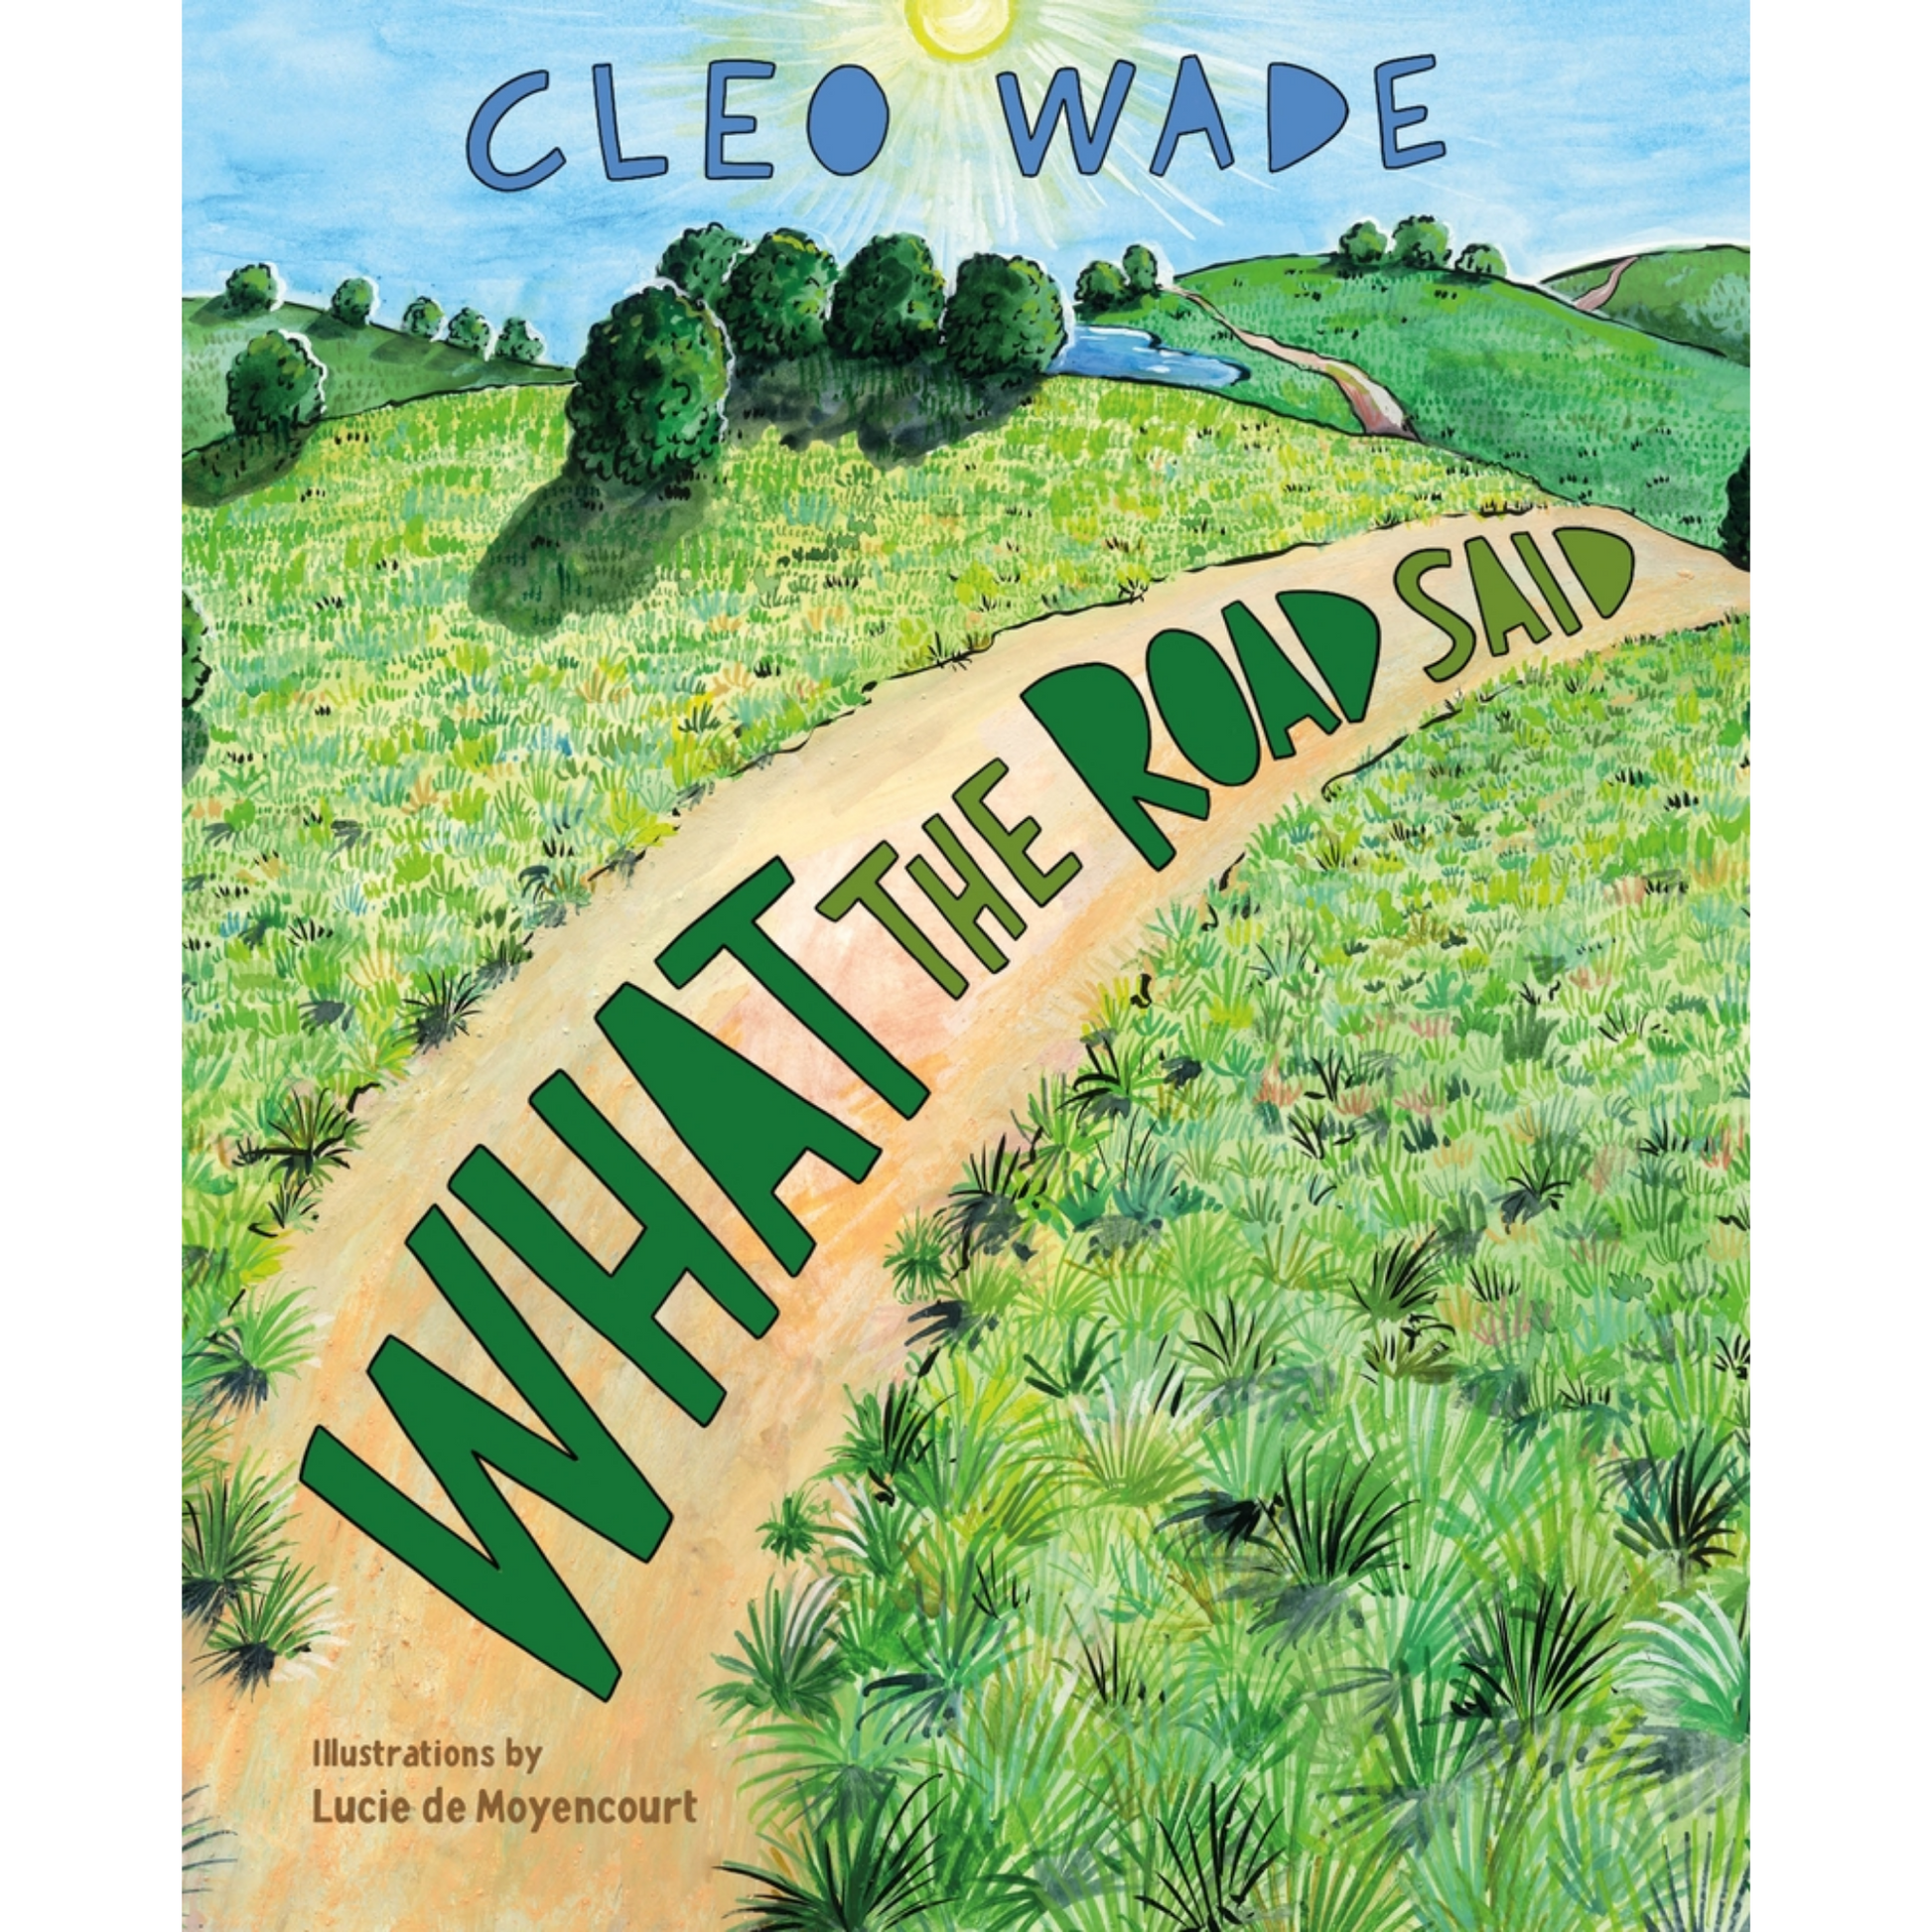 what the road said cleo wade